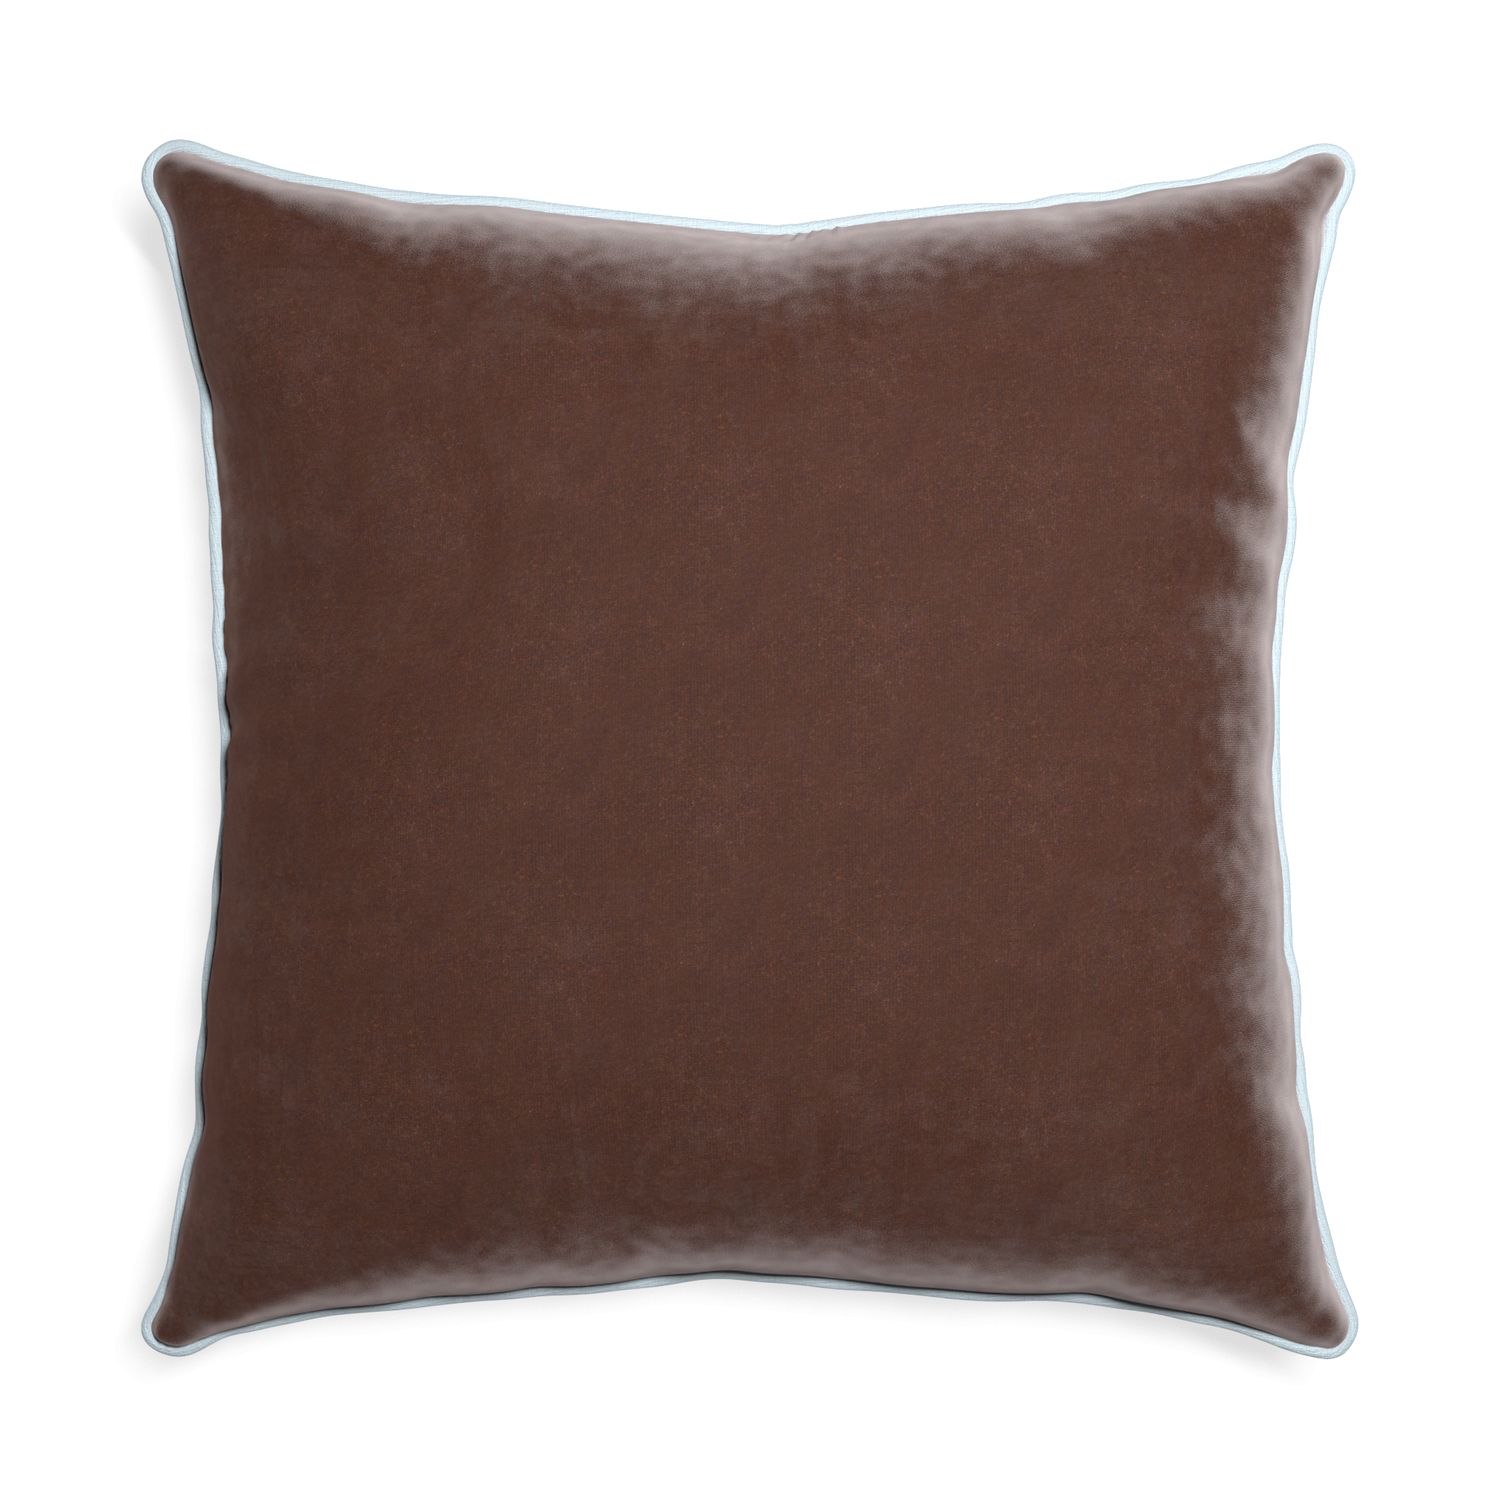 Euro-sham walnut velvet custom pillow with powder piping on white background